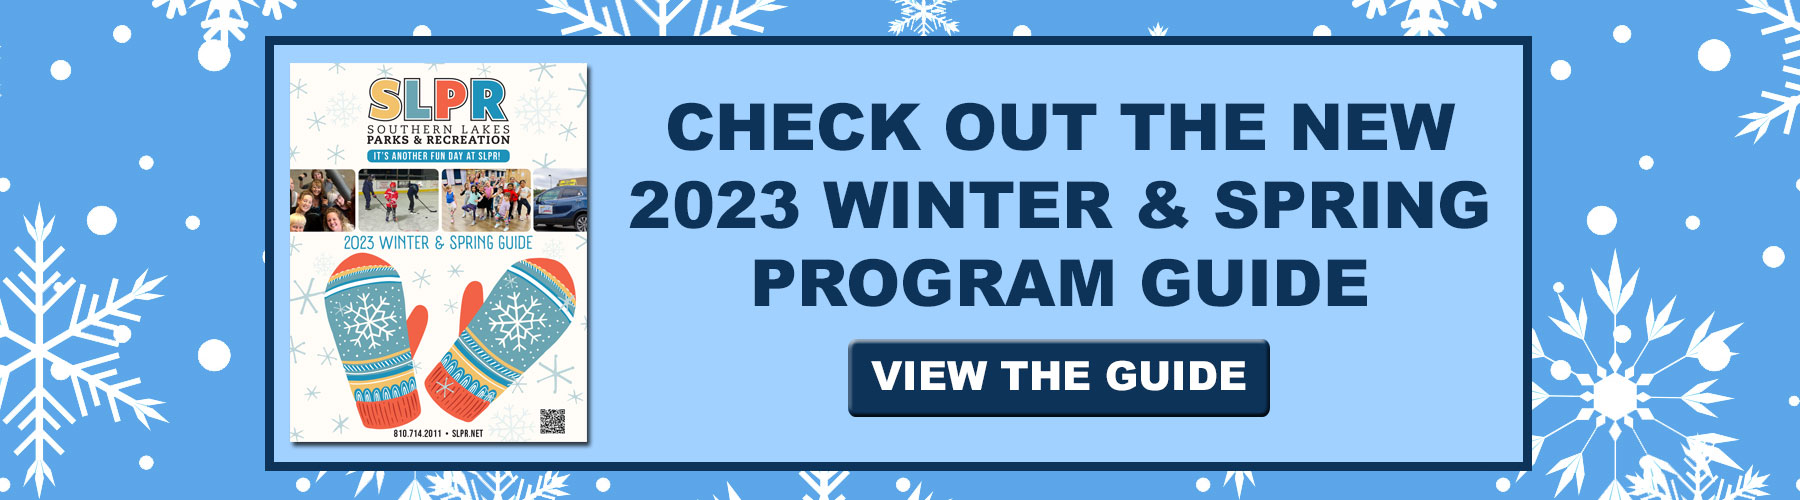 SLPR Winter 2023 Program Guide